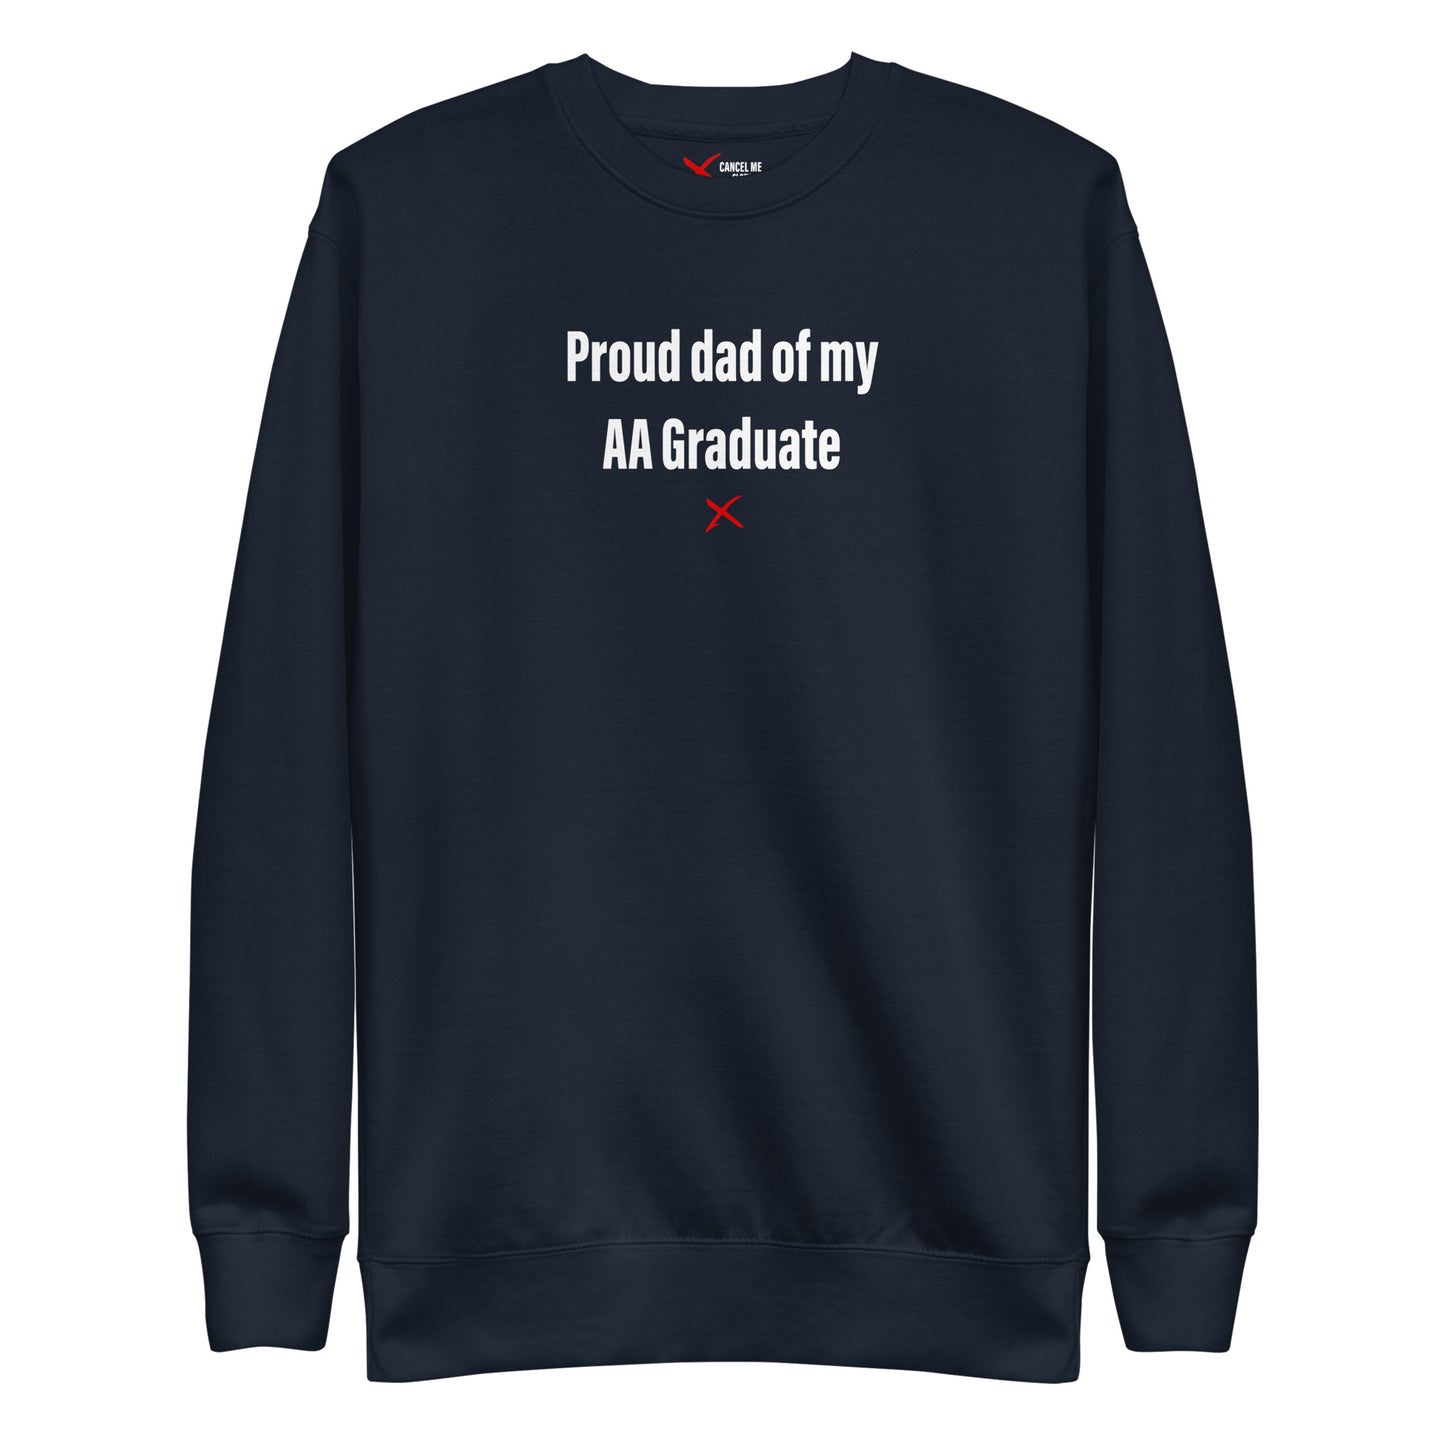 Proud dad of my AA Graduate - Sweatshirt